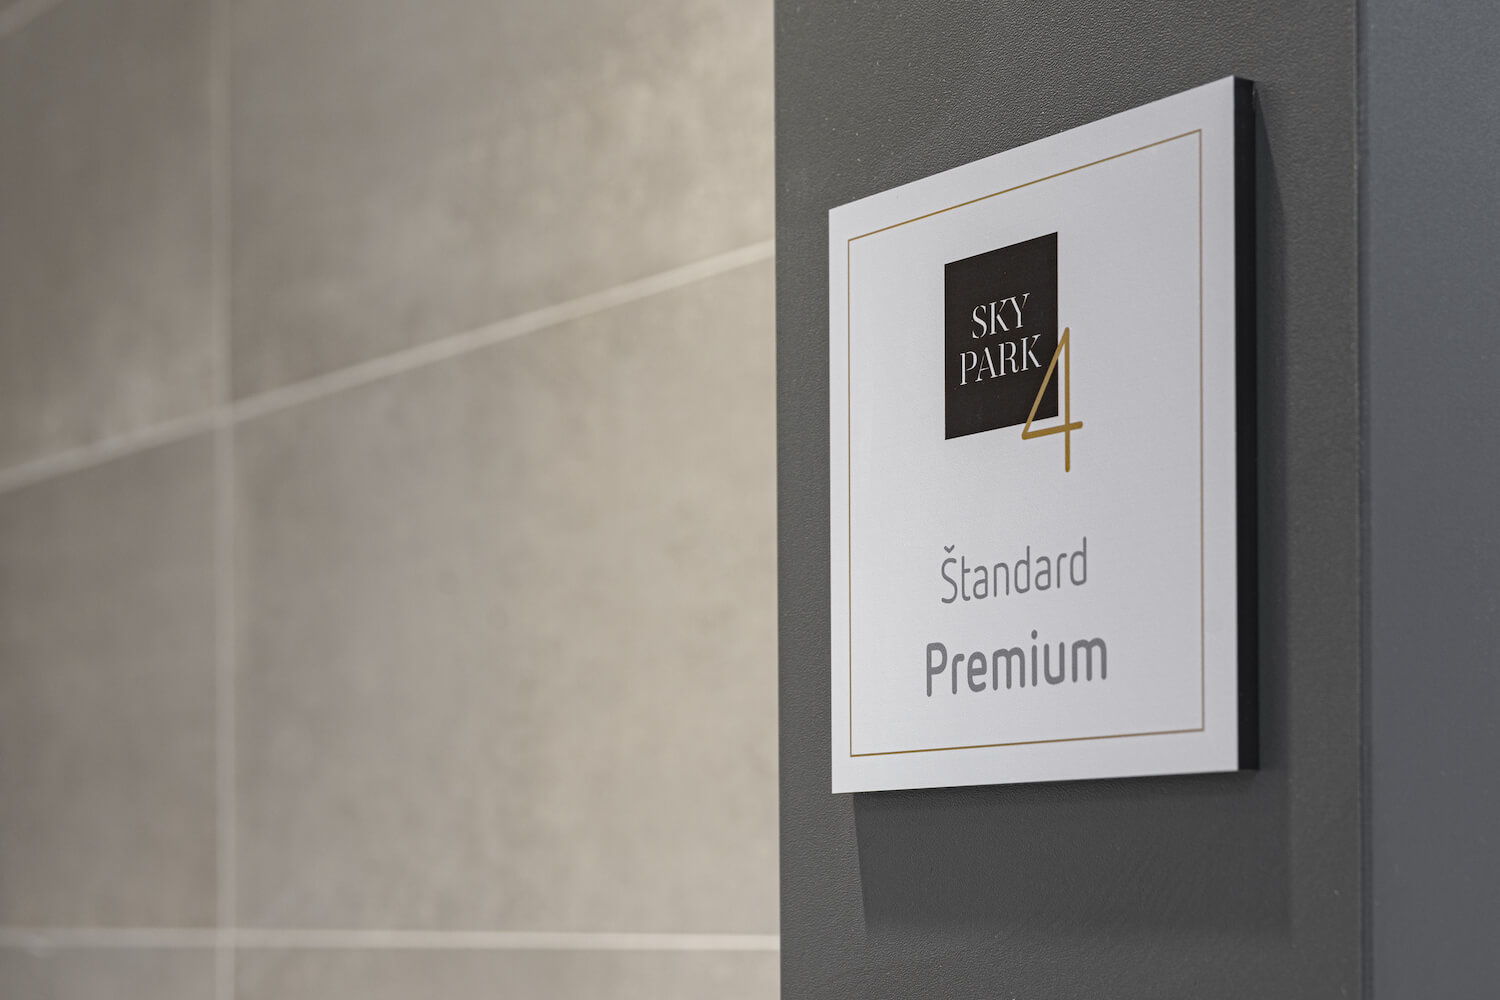 Standard Premium pro Sky Park by Zaha Hadid